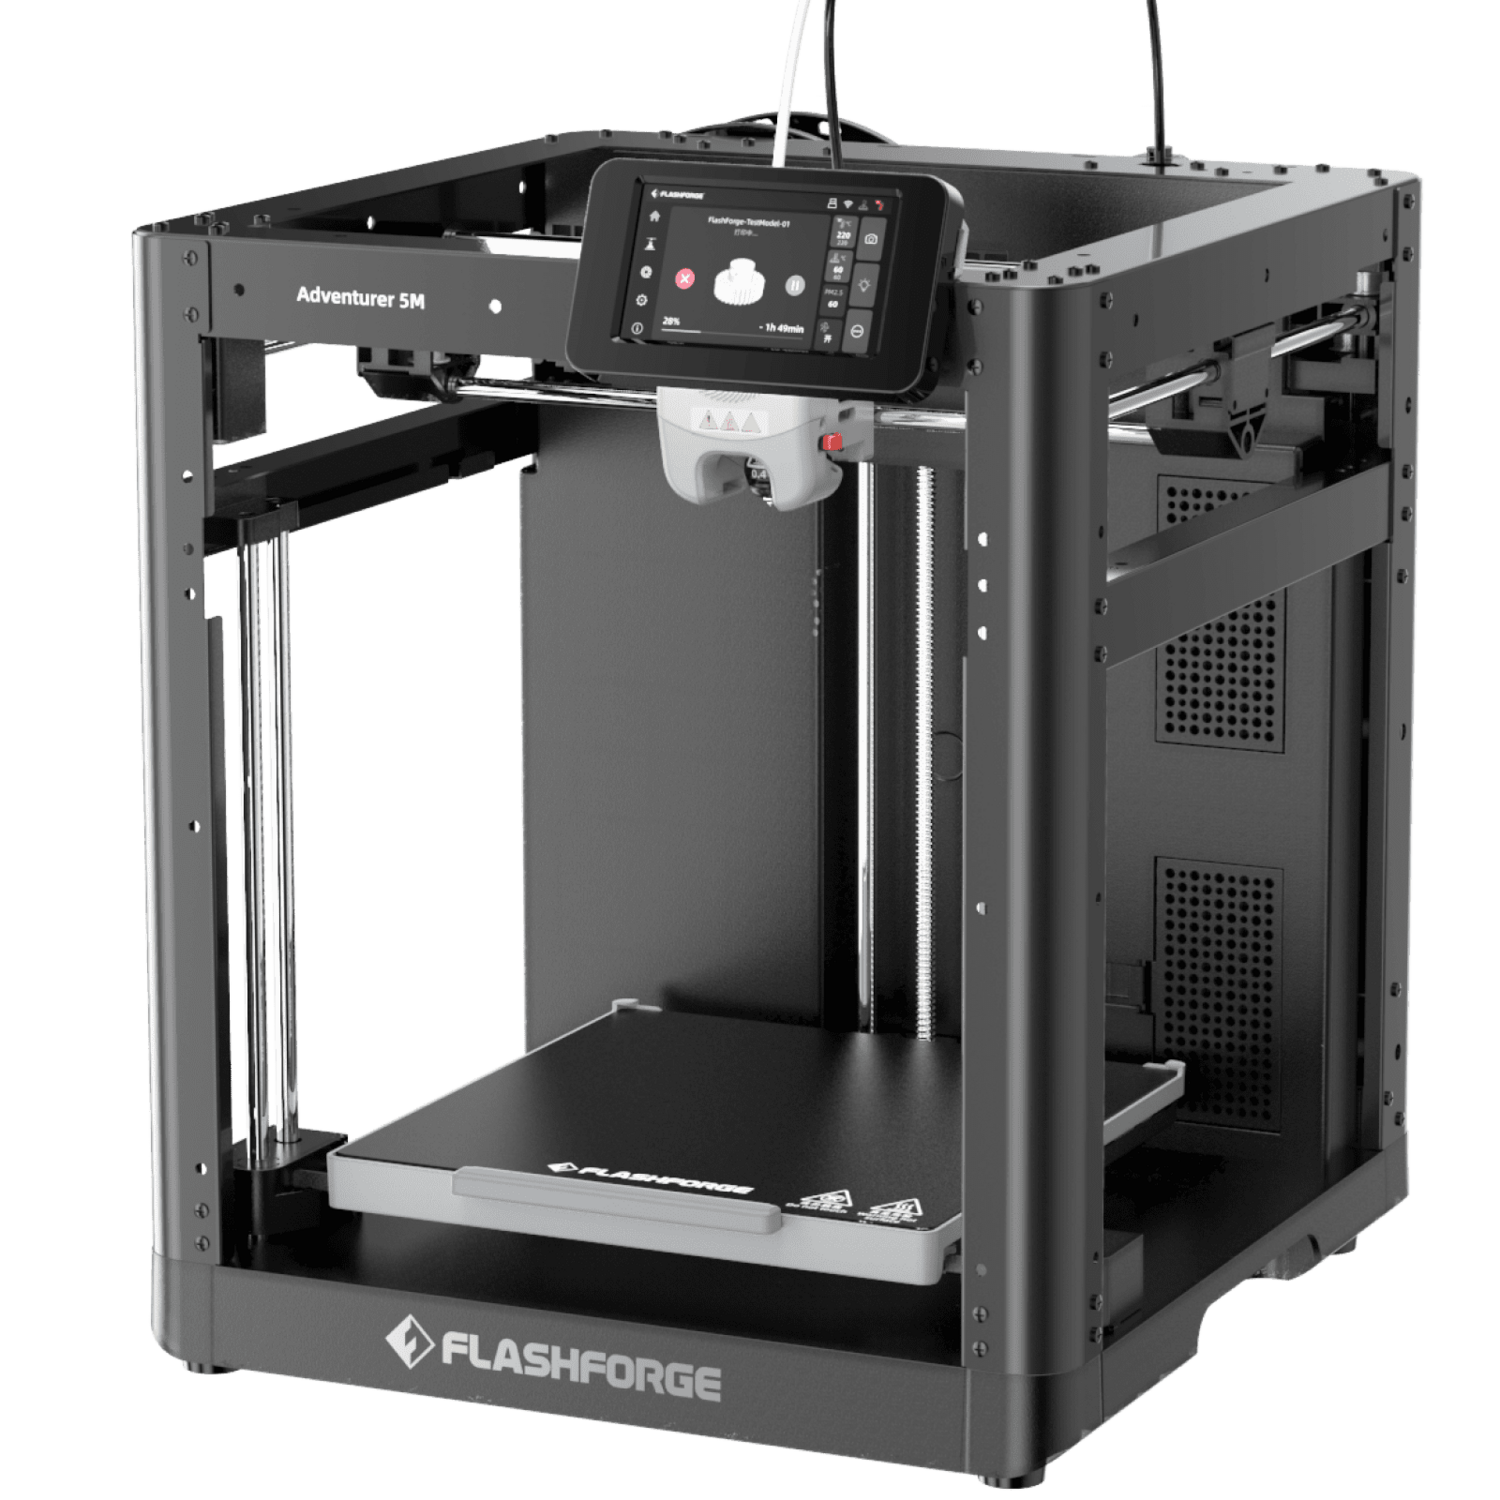 Flashforge-ME ADVENTURER 5M 3D Printer